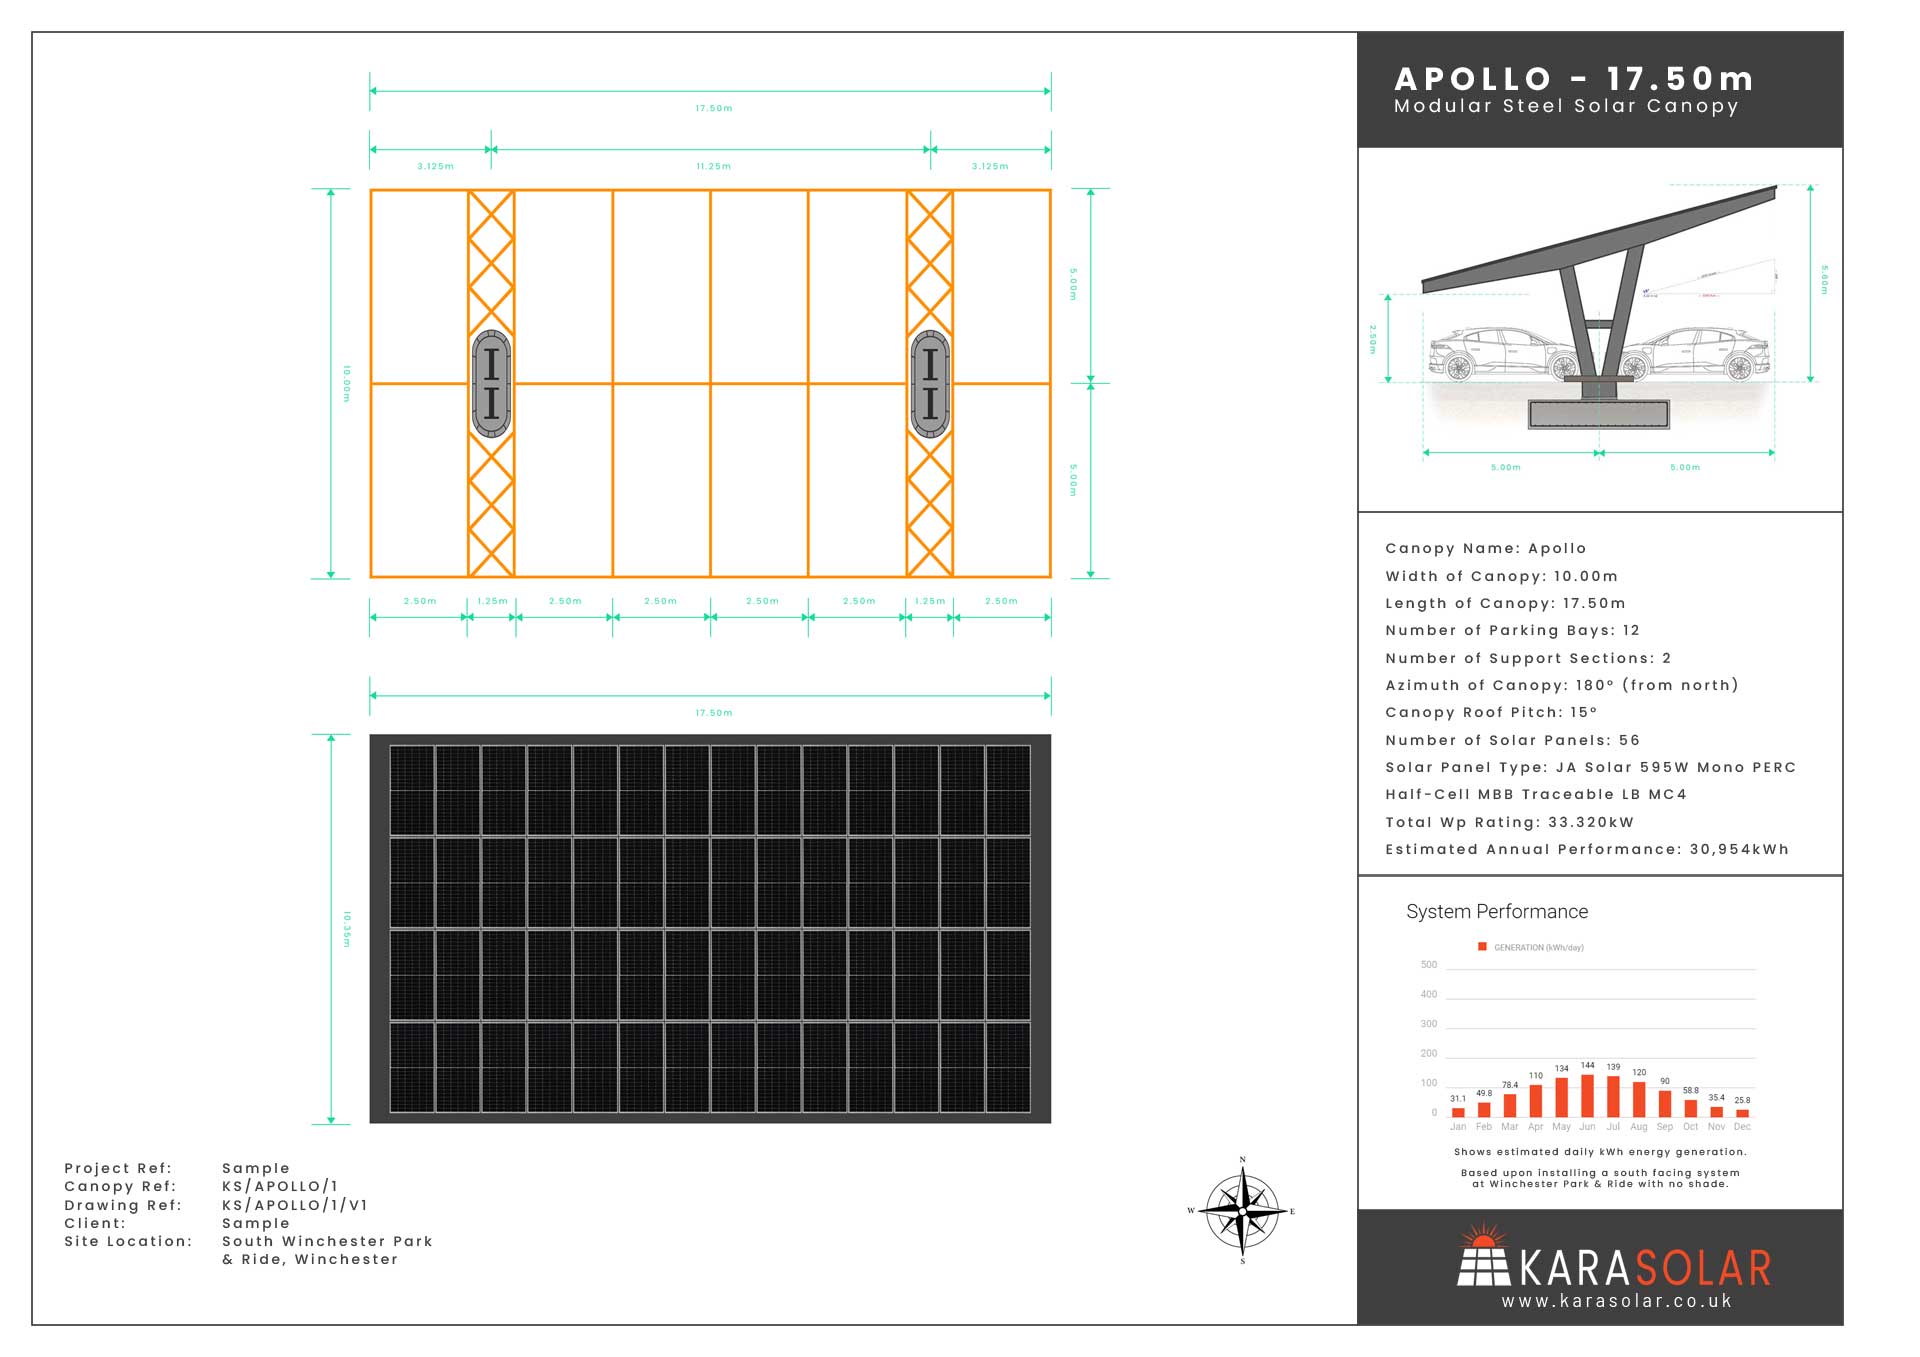 Apollo-Solar-Canopy-Datasheet-Sample-17.50m